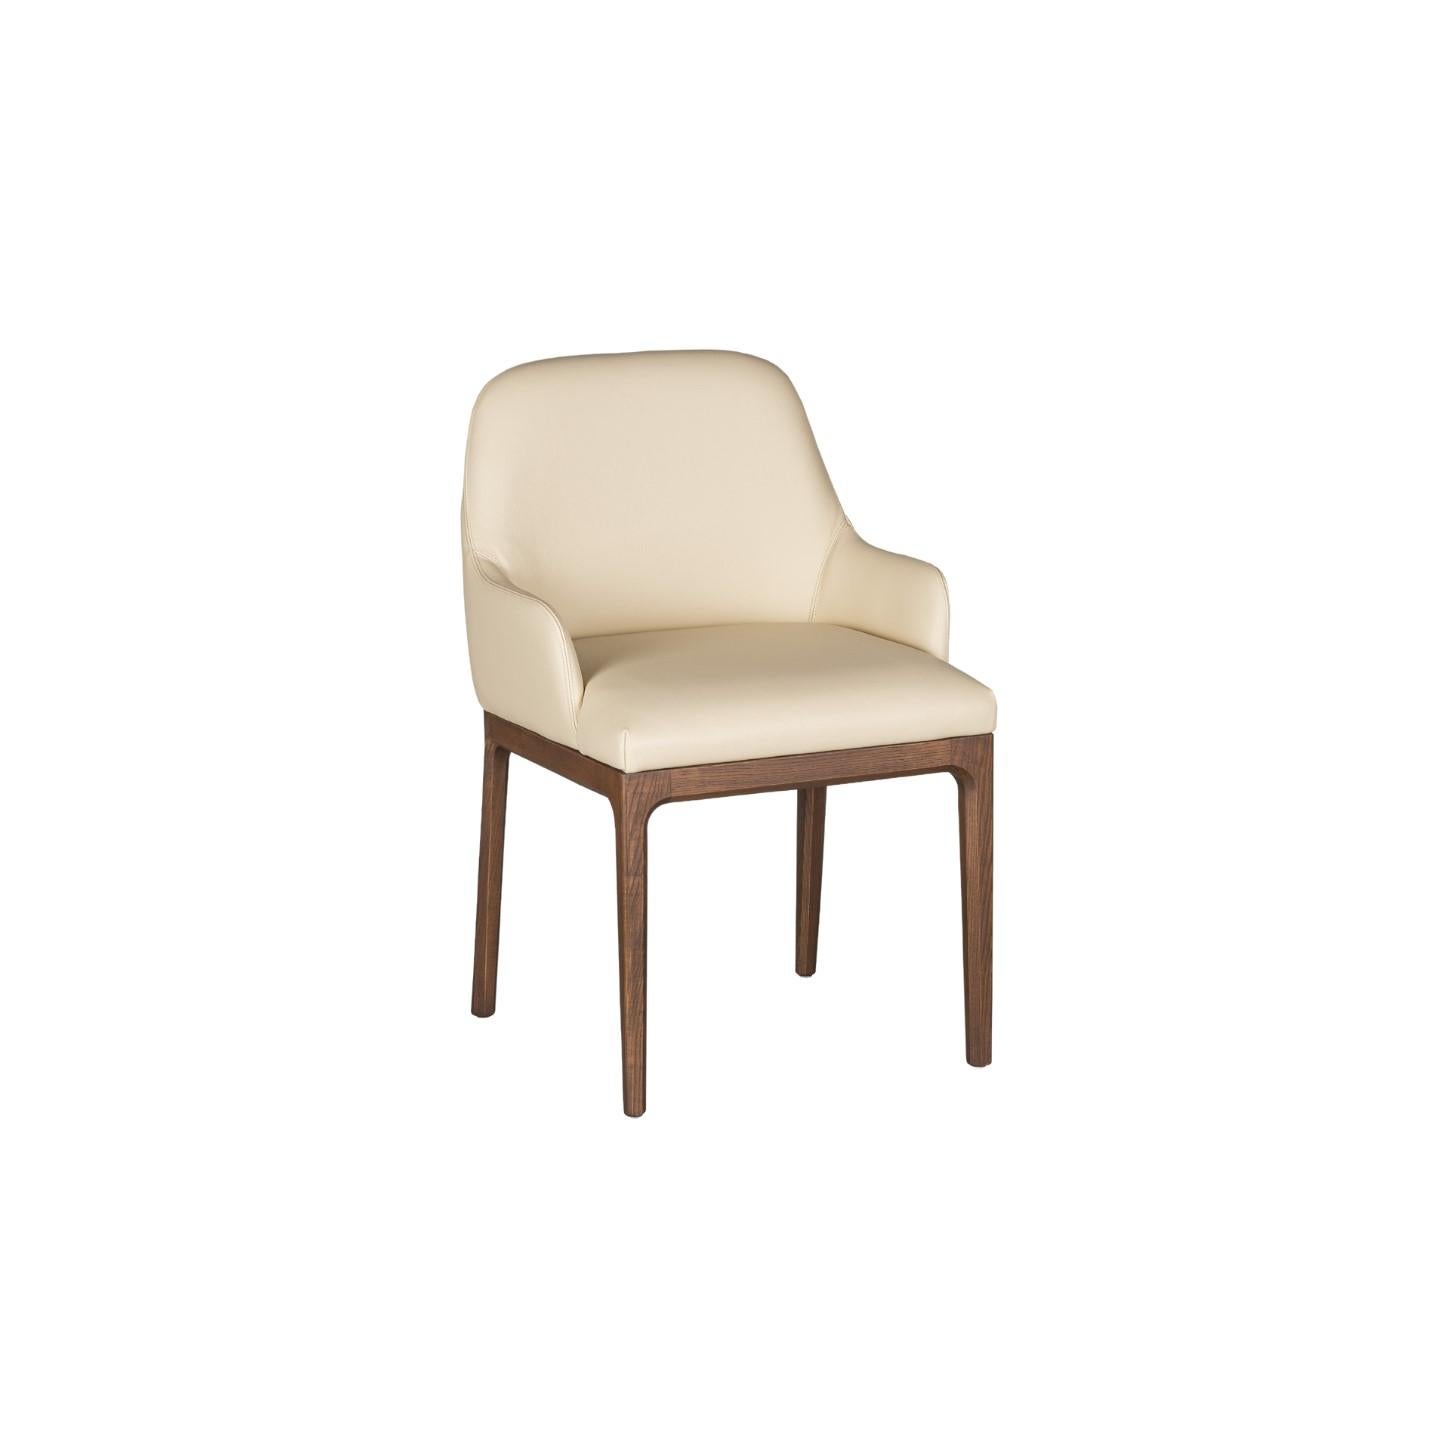 Fauteuil Bellagio de style contemporain en bois de frêne avec assise recouverte de cuir ou de tissus.
Design Libero Rutilo